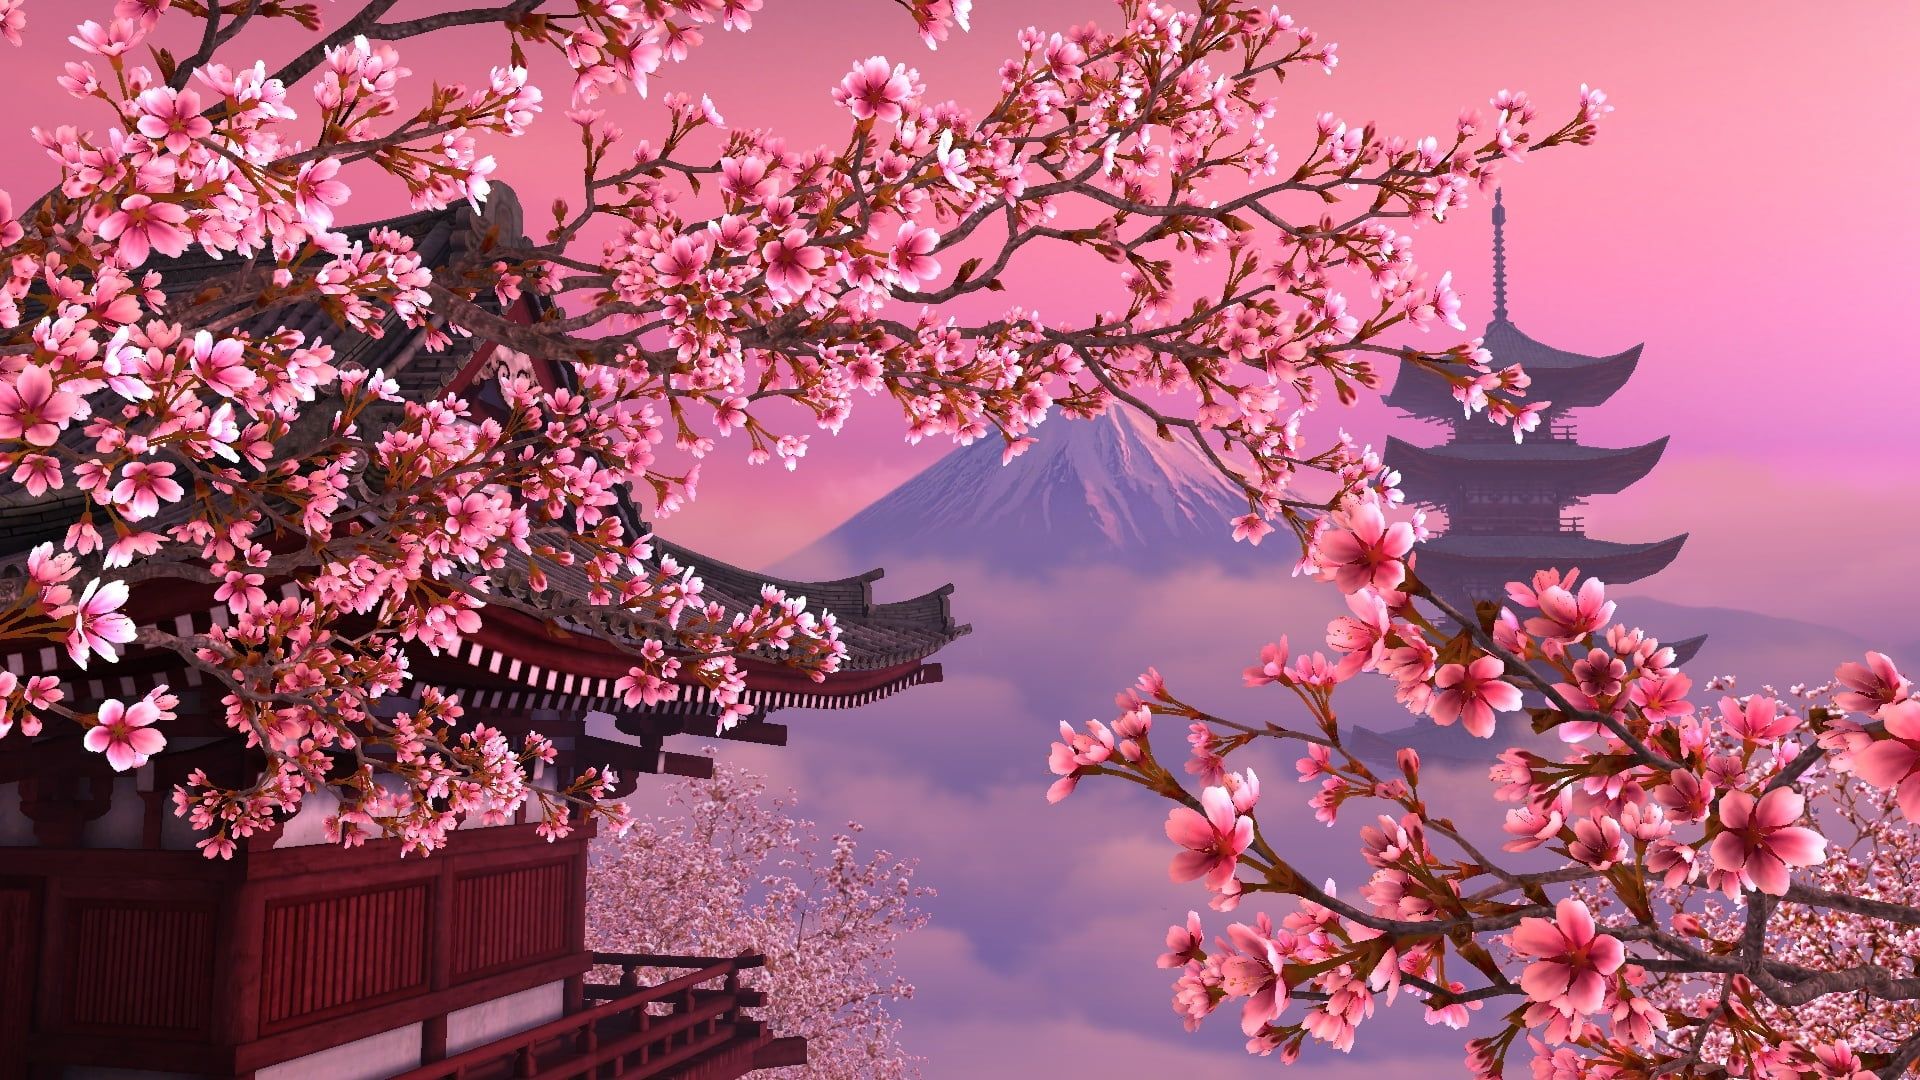 X cherry blossom on mount fiji animated wallpaper rwallpaper